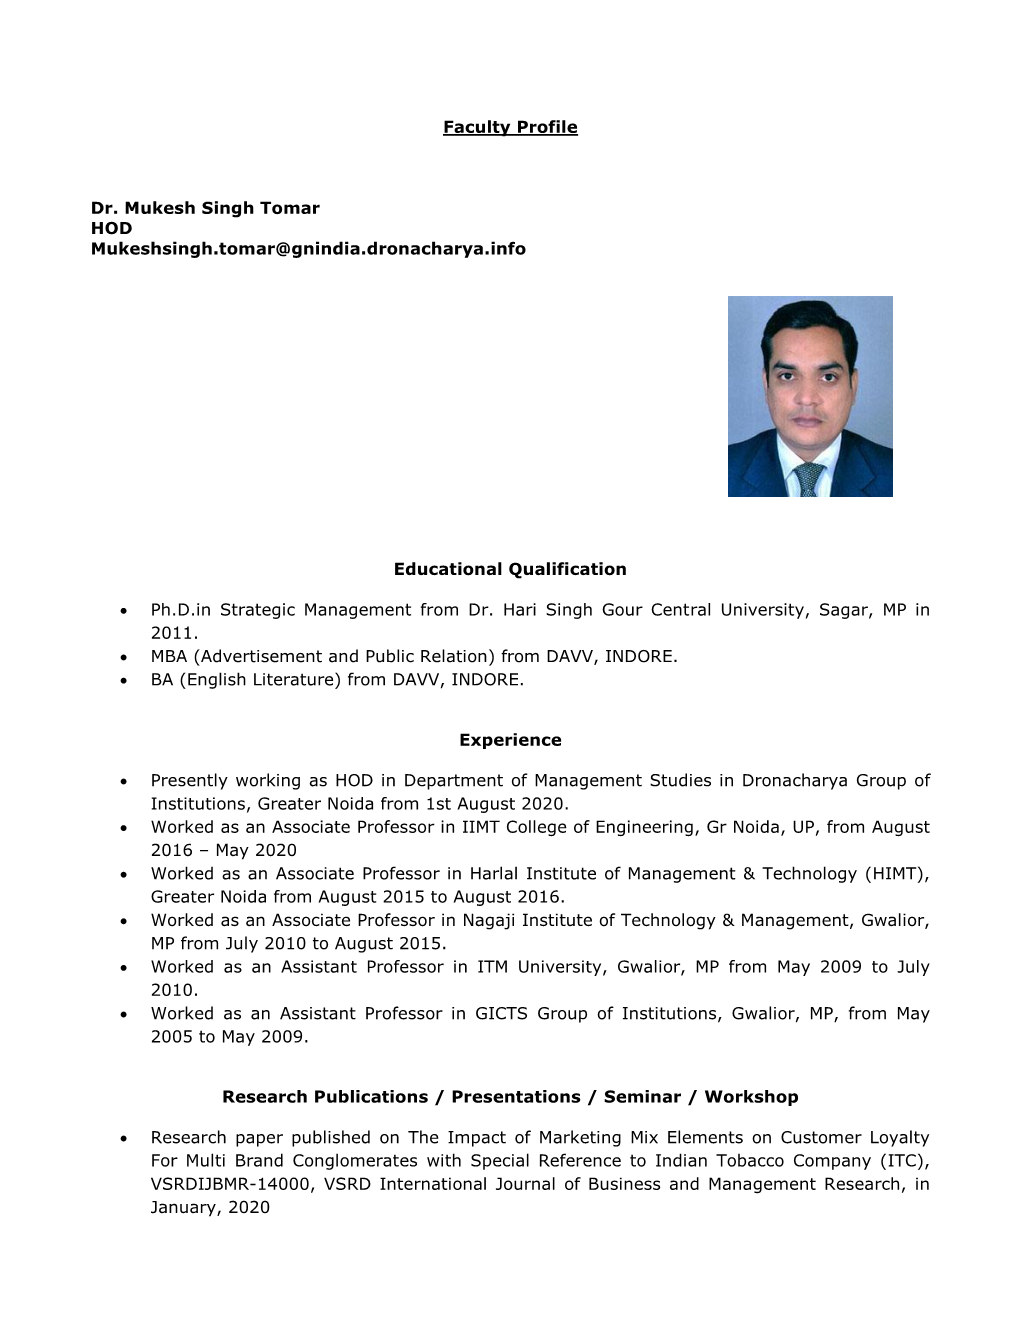 Faculty Profile Dr. Mukesh Singh Tomar HOD Mukeshsingh.Tomar